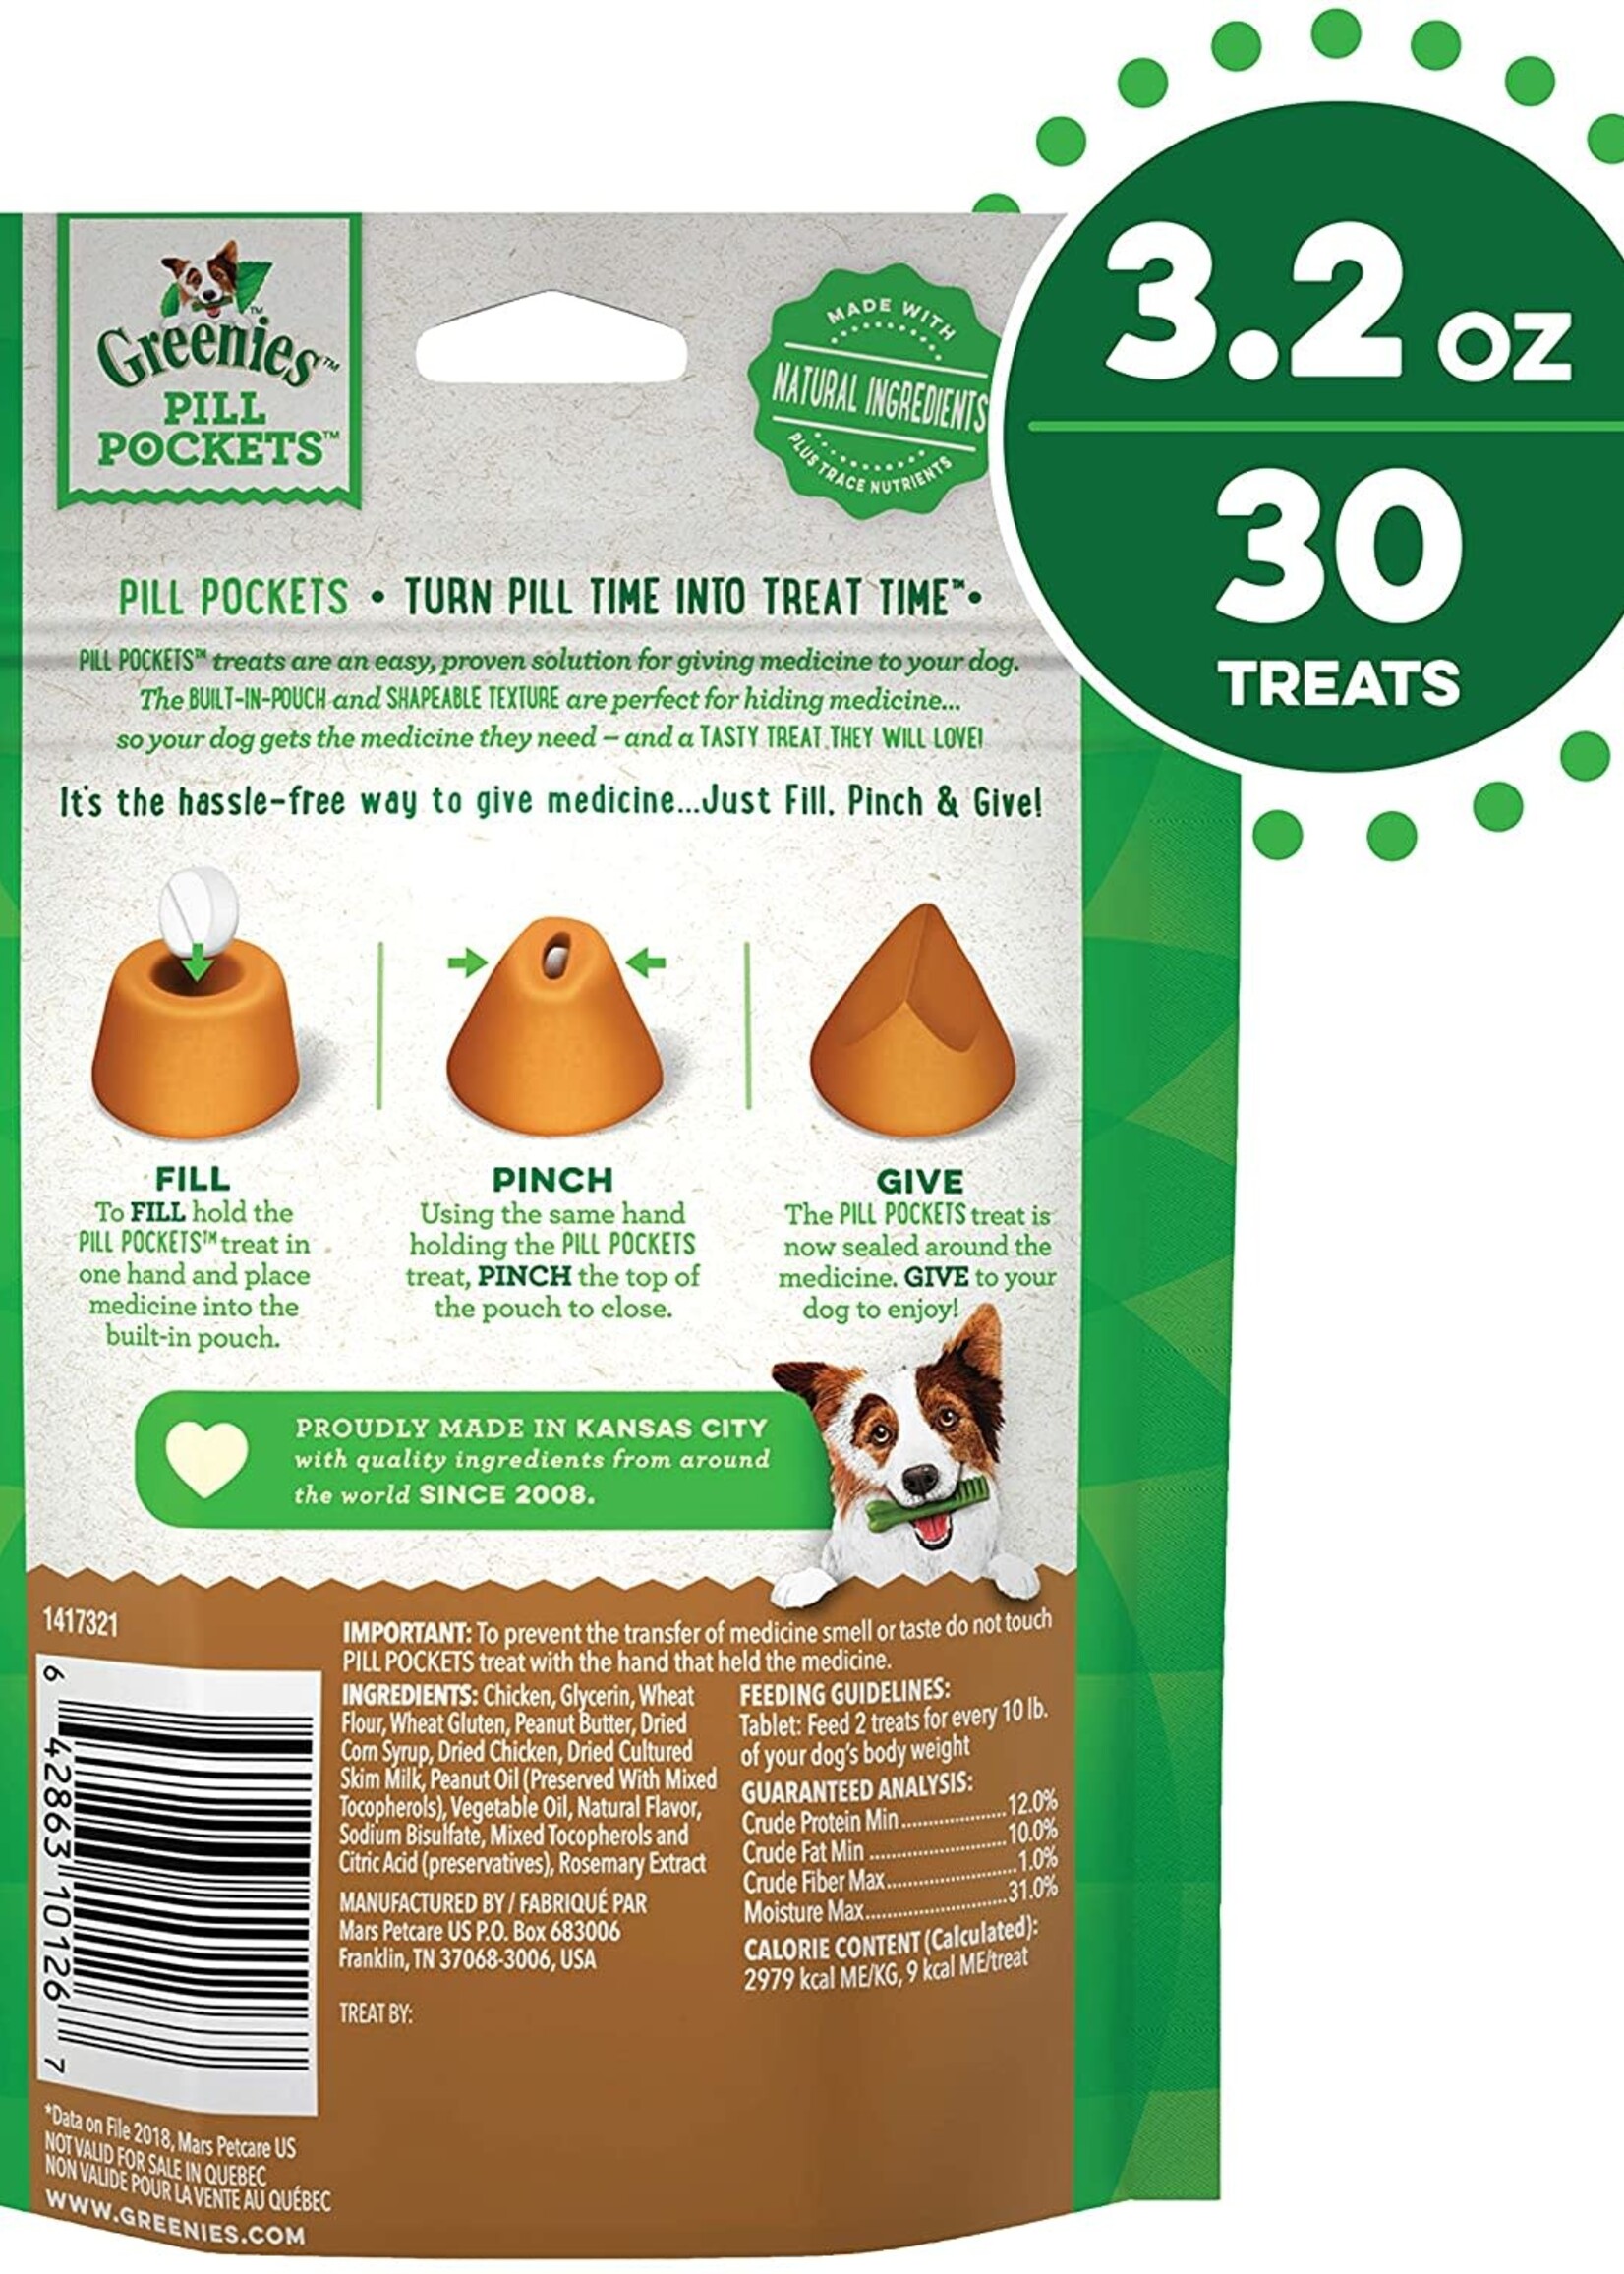 GREENIES GREENIES Pill Pockets Tablet Size Peanut Butter Flavor Dog Treats 3.2-oz